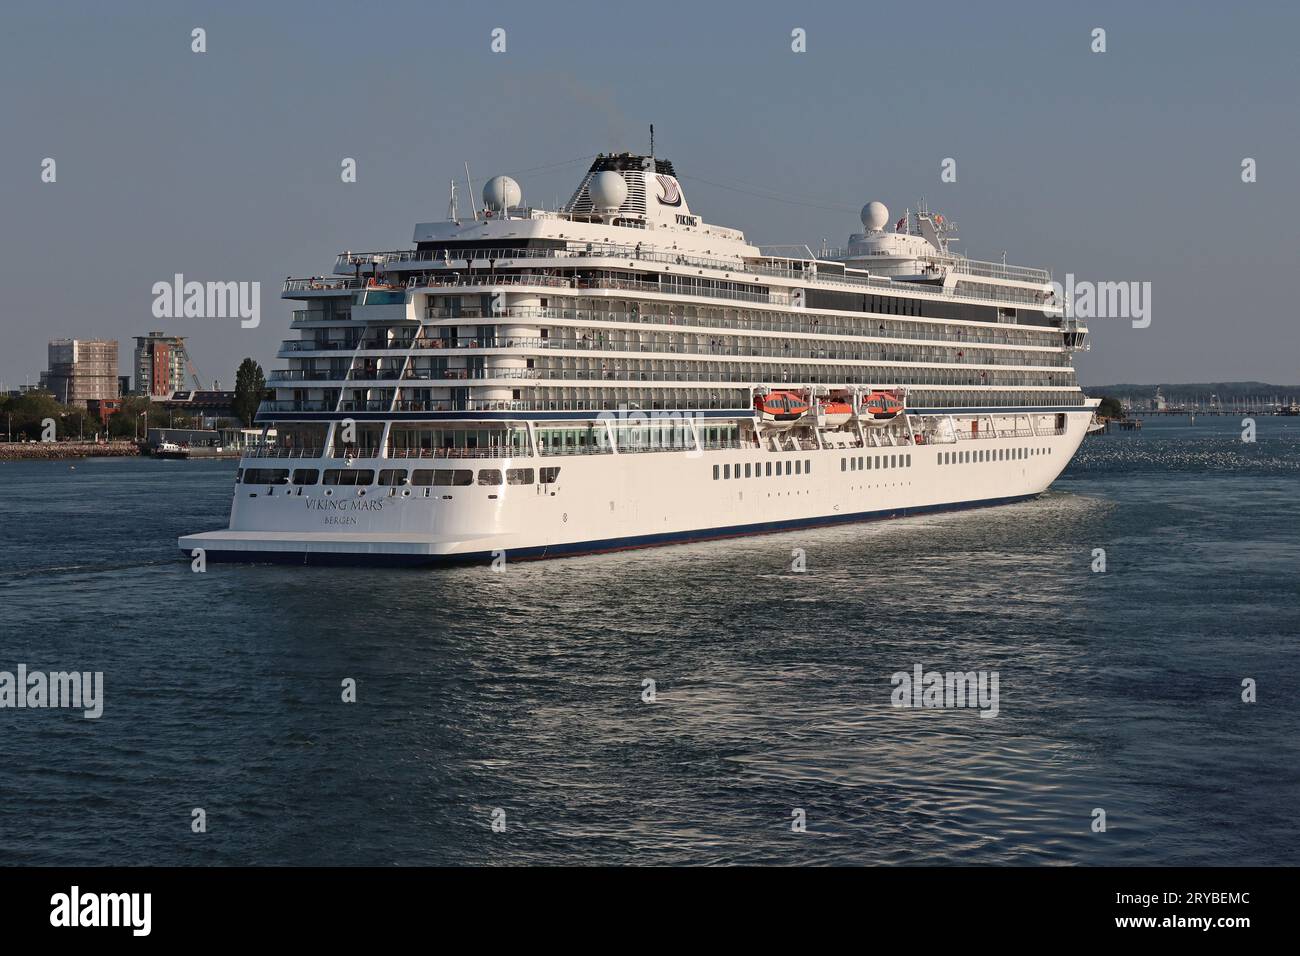 The cruise ship MS VIKING MARS heading towards a berth at the international port terminal Stock Photo